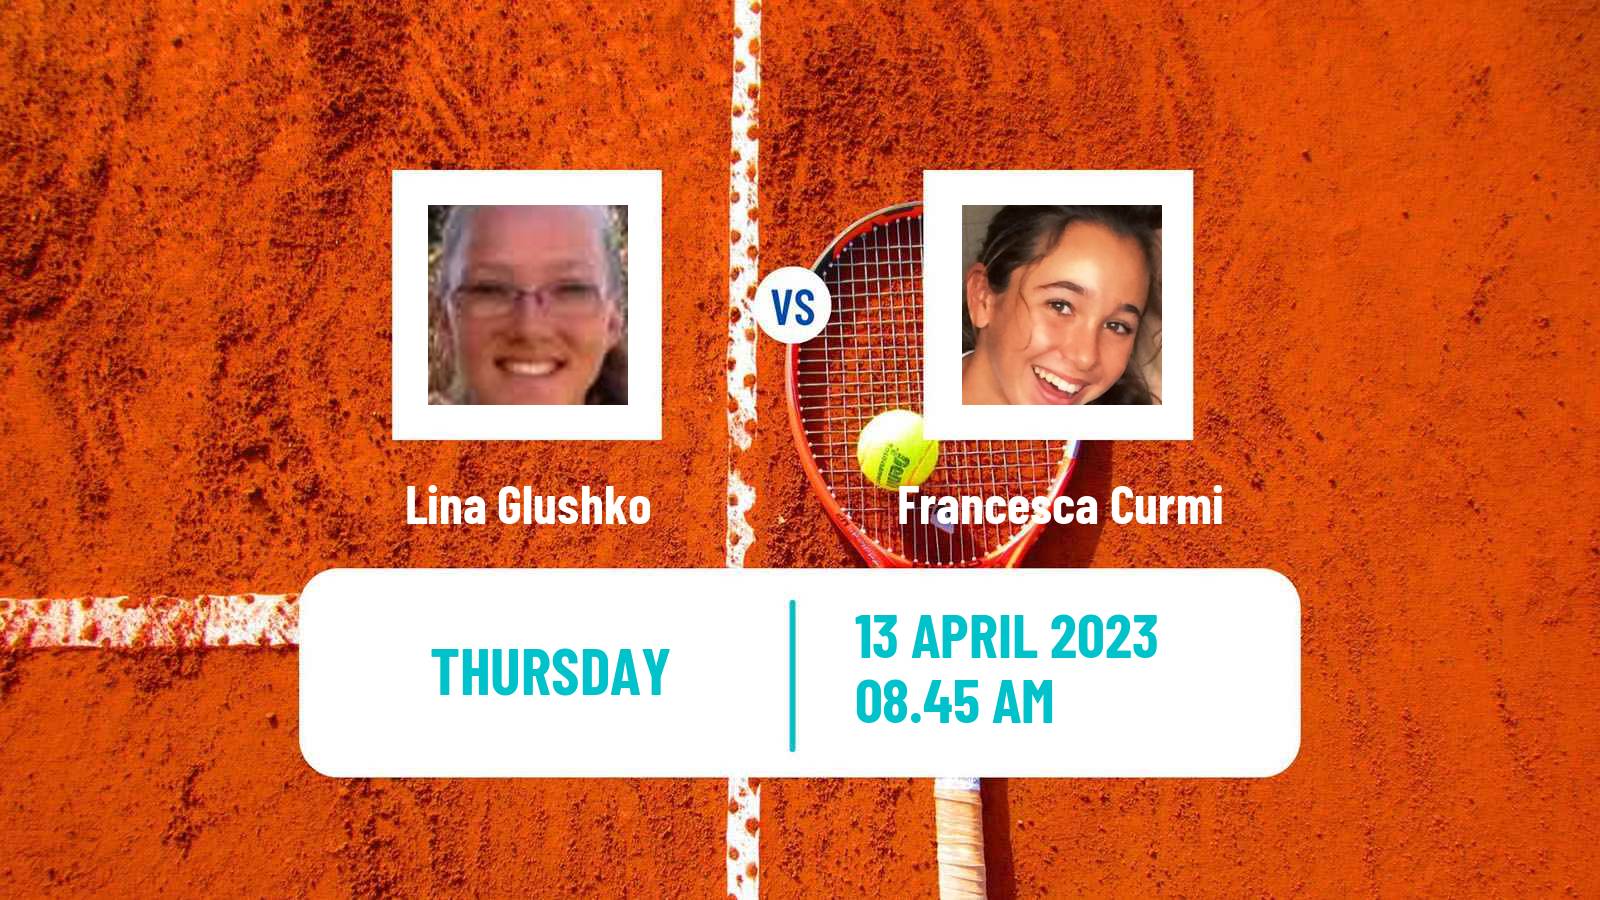 Tennis WTA Billie Jean King Cup Group II Lina Glushko - Francesca Curmi